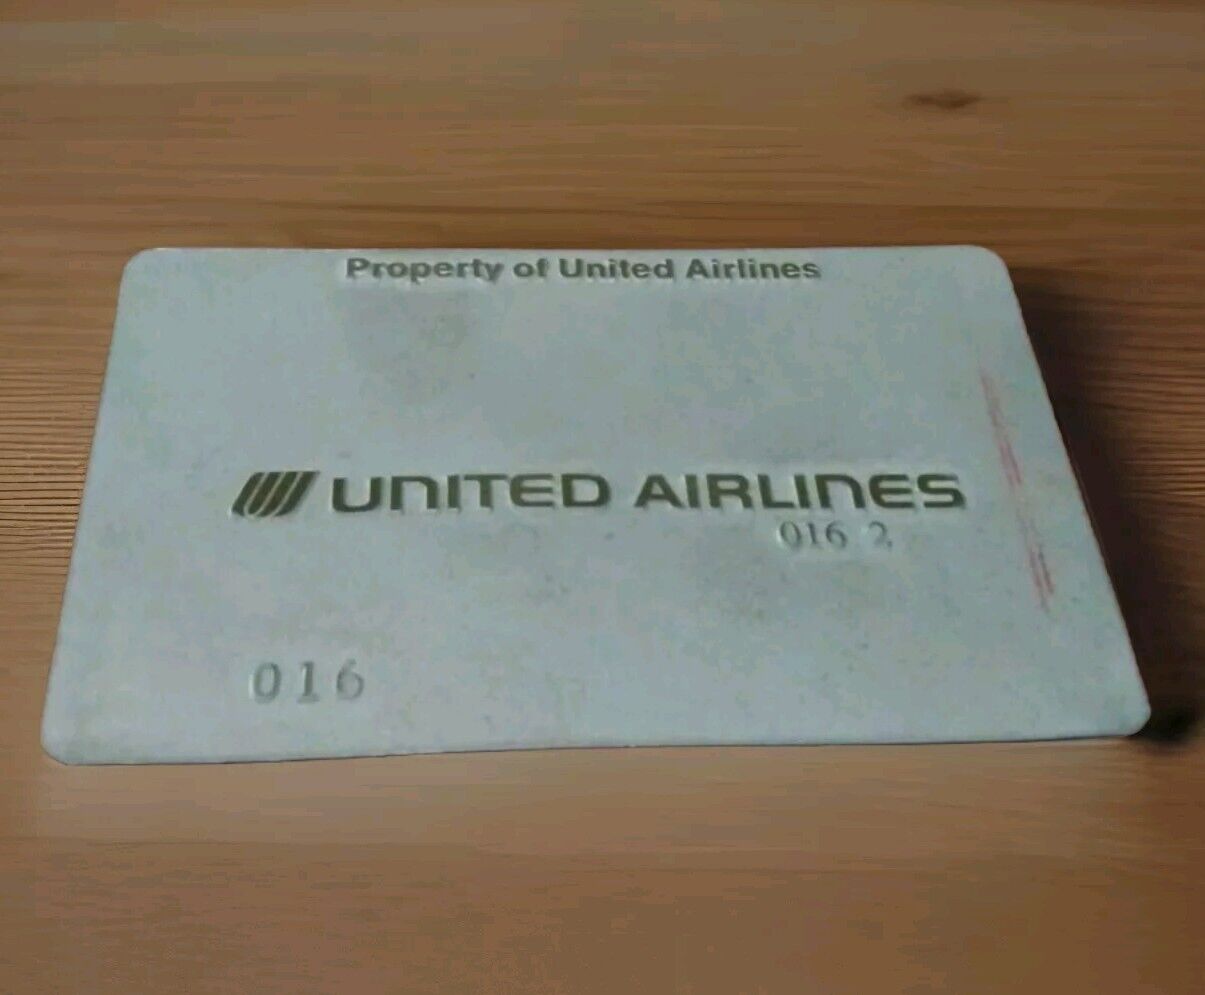 Vintage Addressograph AIRLINE TICKET VALIDATION PLATE - United Air Lines  016 2